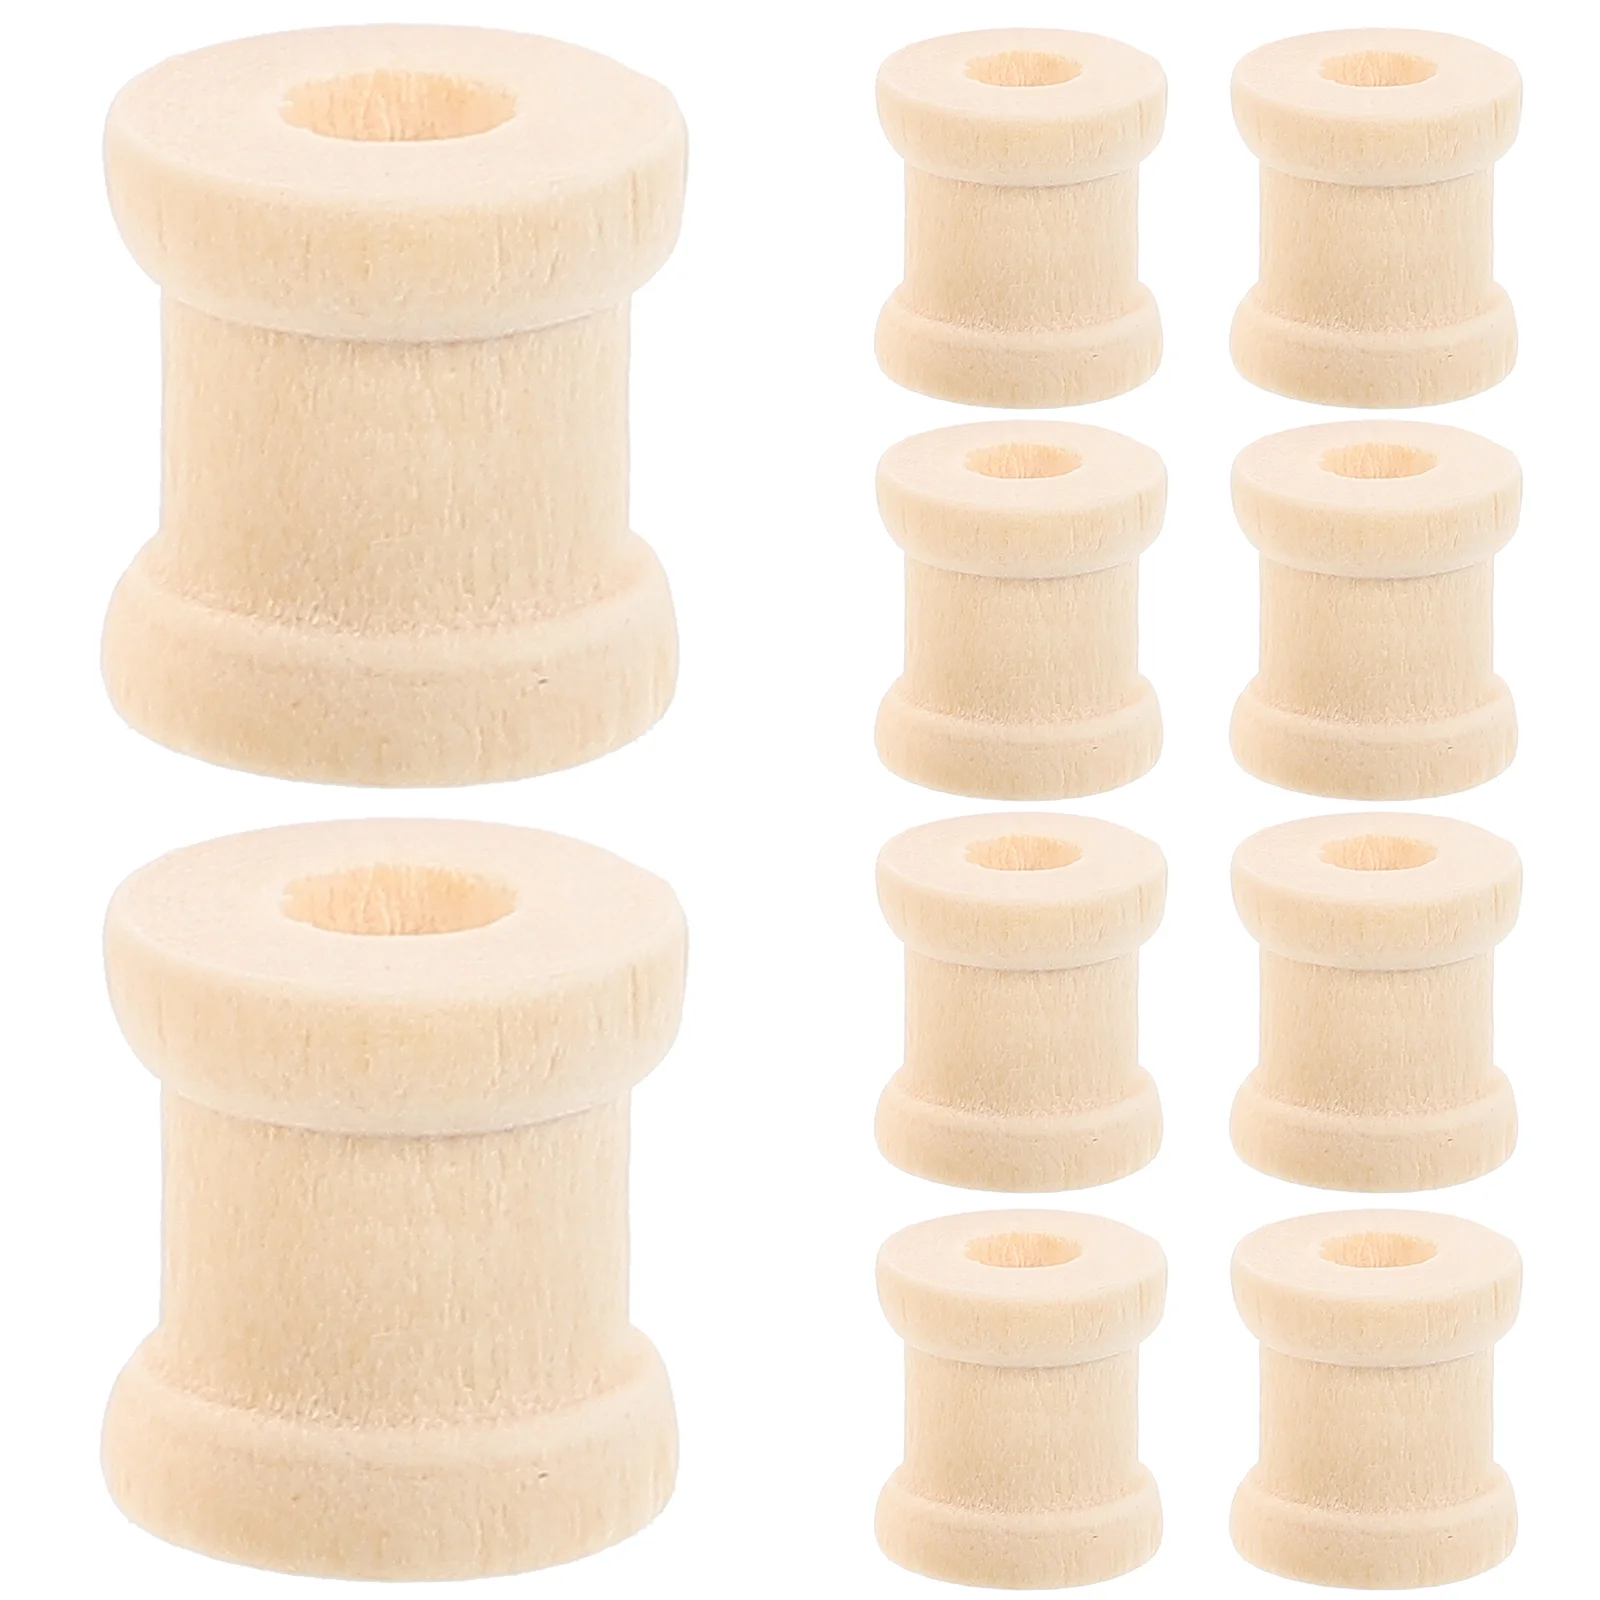 https://ae01.alicdn.com/kf/Sb7baea9429084910ac7584c7b47d53f4W/100PCS-Unfinished-Wooden-Thread-Spools-Weaving-Bobbins-Empty-Thread-Spool-for-Embroidery-Thread-Pom-Ribbon-Crafts.jpg